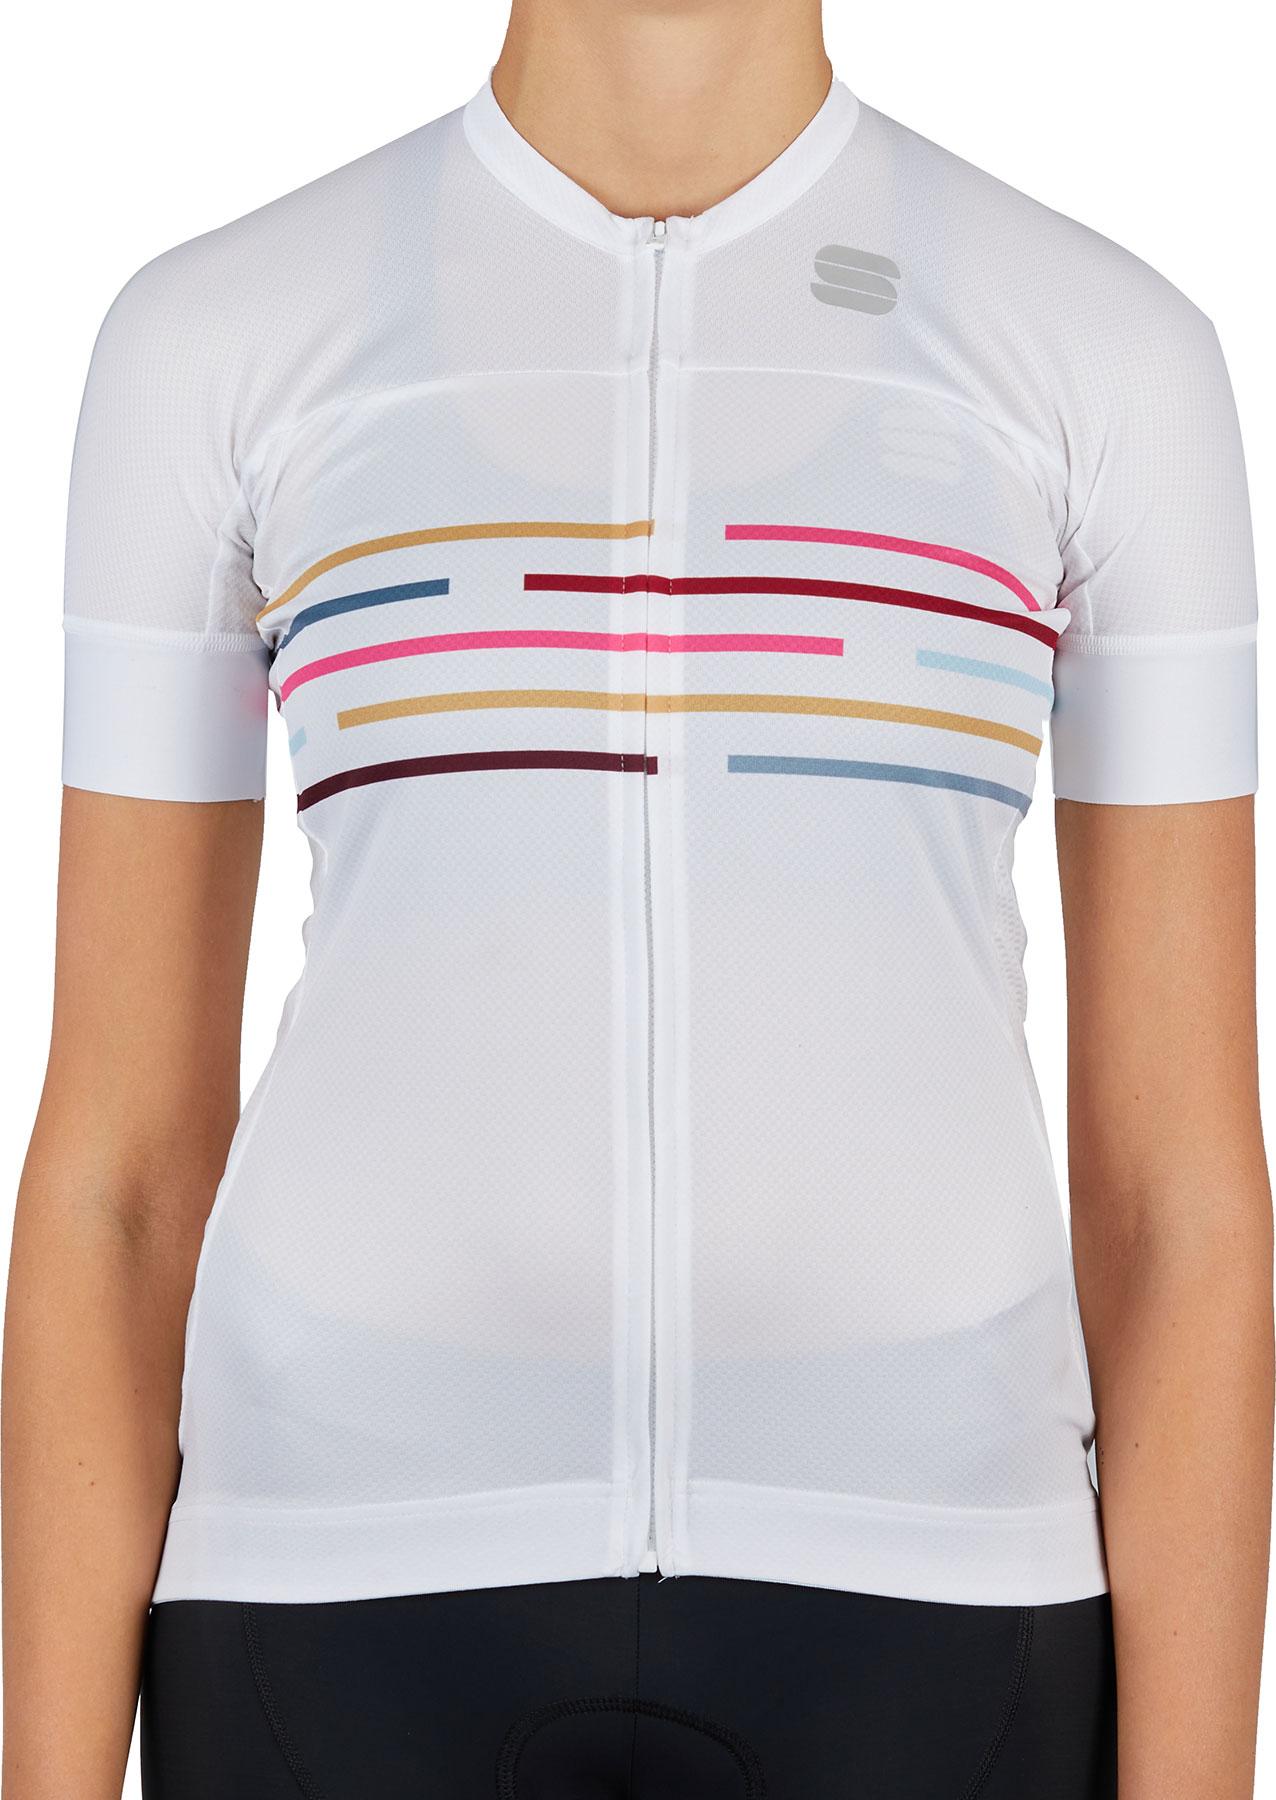 Sportful Womens Velodrome Cycling Jersey - White